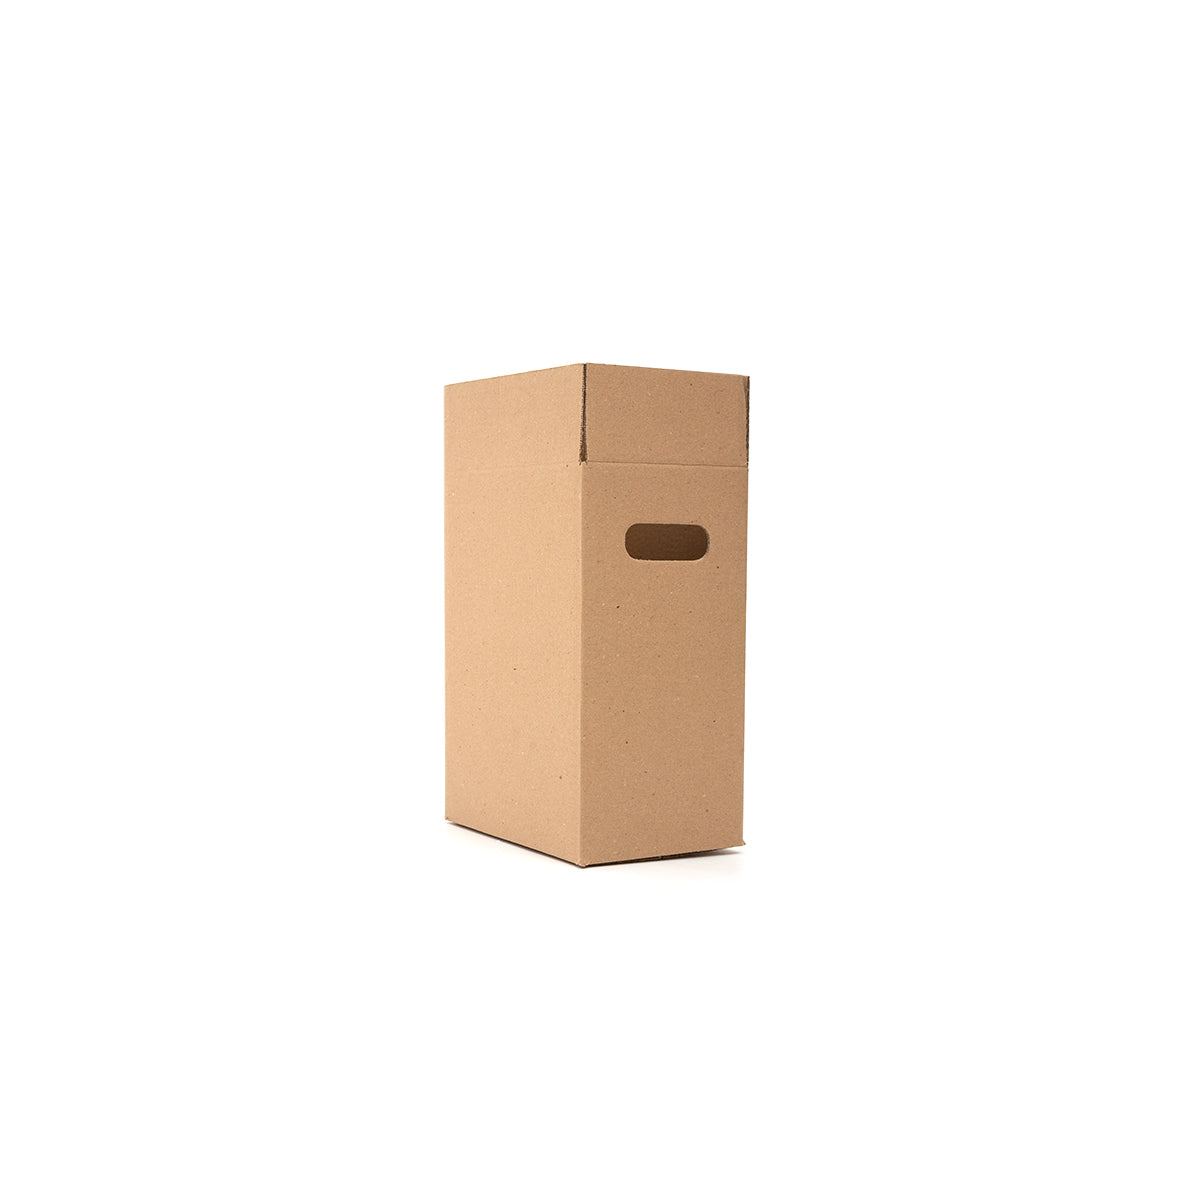 Microtriple American style cardboard box EB 22,8x15,6x30,3/32,3 cm brown adjustable SCD22